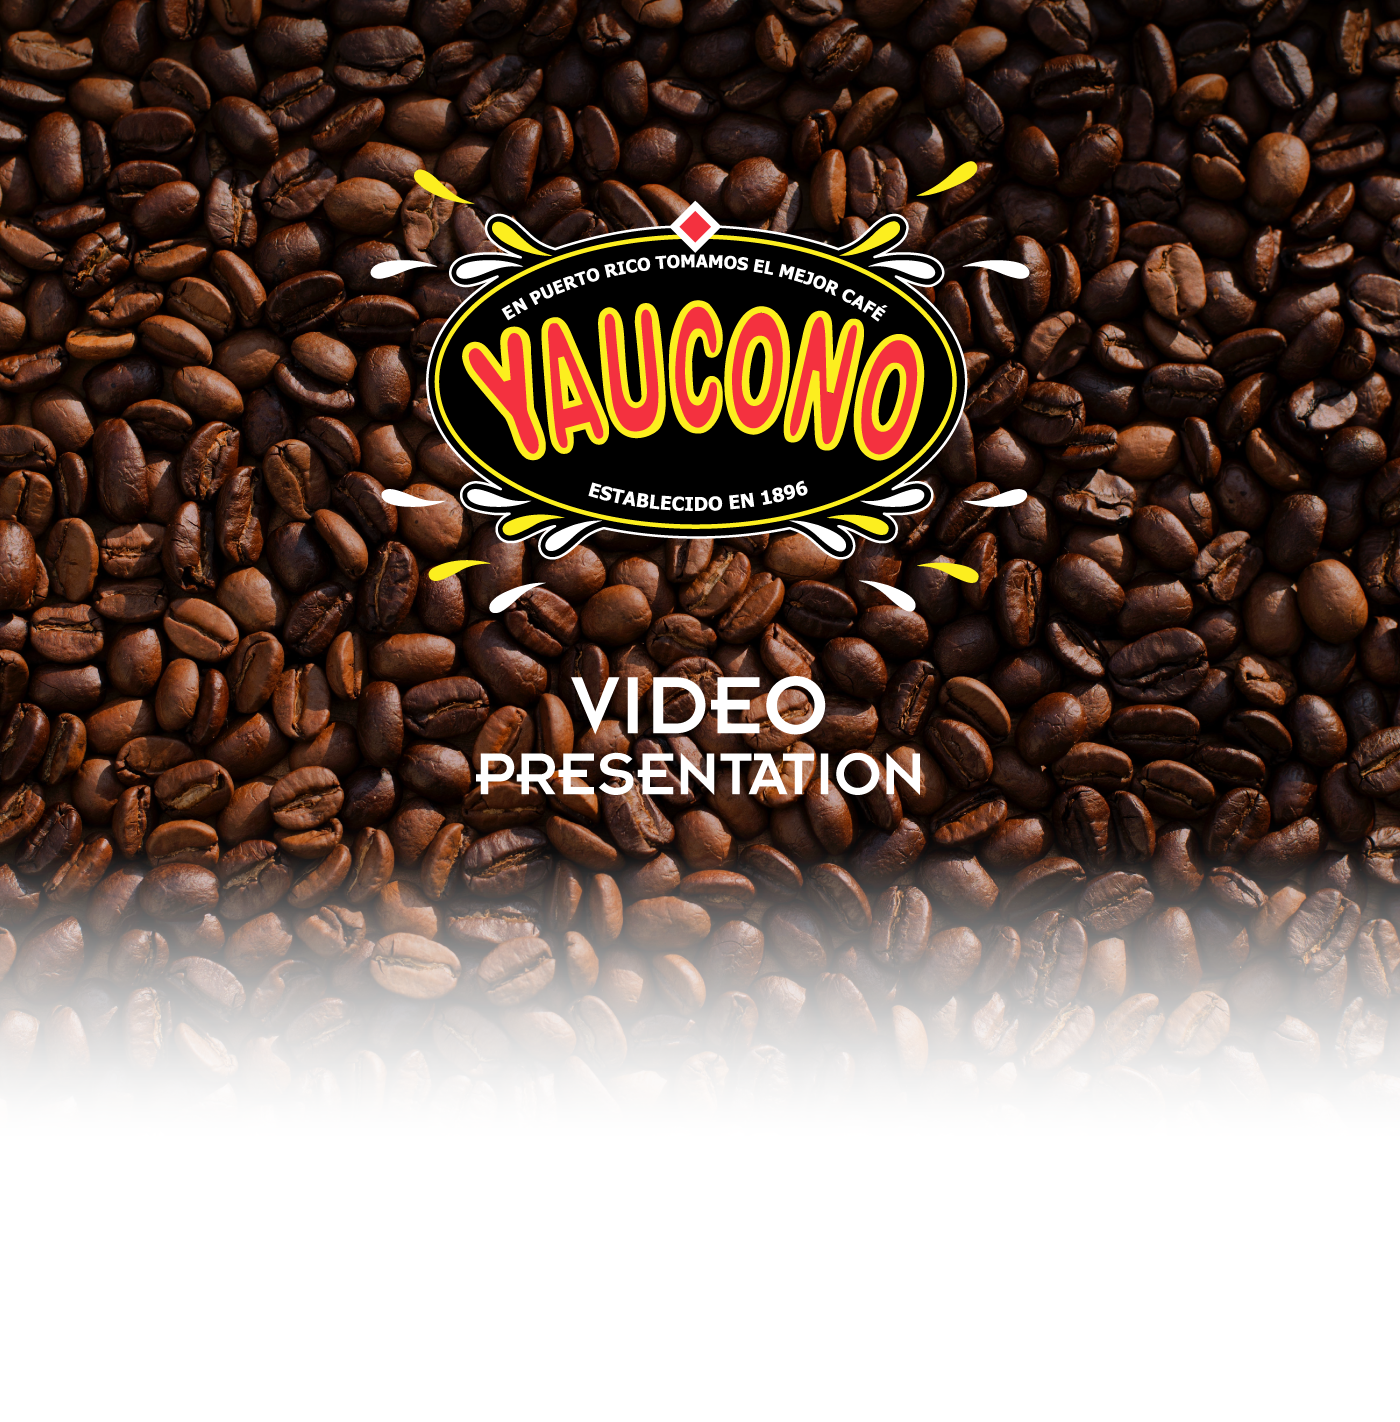 Yaucono puerto rico Advertising  video vfx Editing  marketing   creative animation  digital